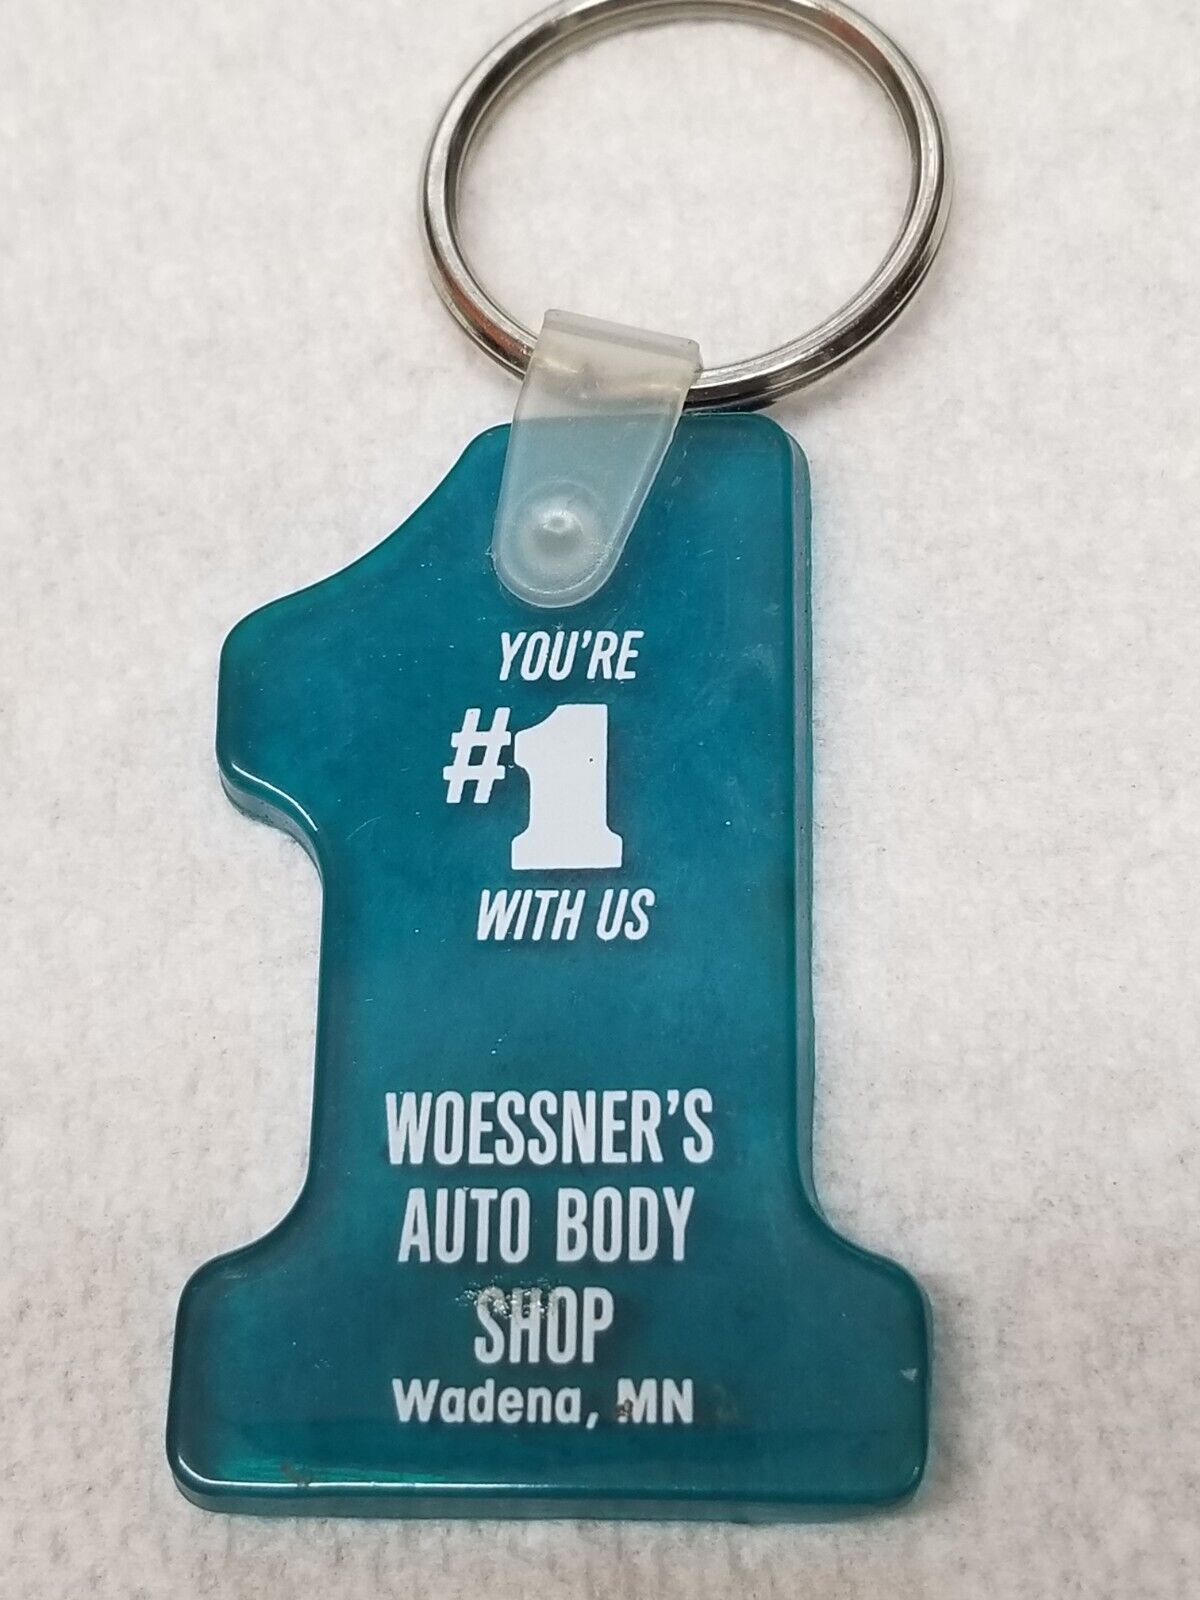 Woessner\'s Auto Body Shop Keychain Wadena Minnesota Plastic 1980s Vintage